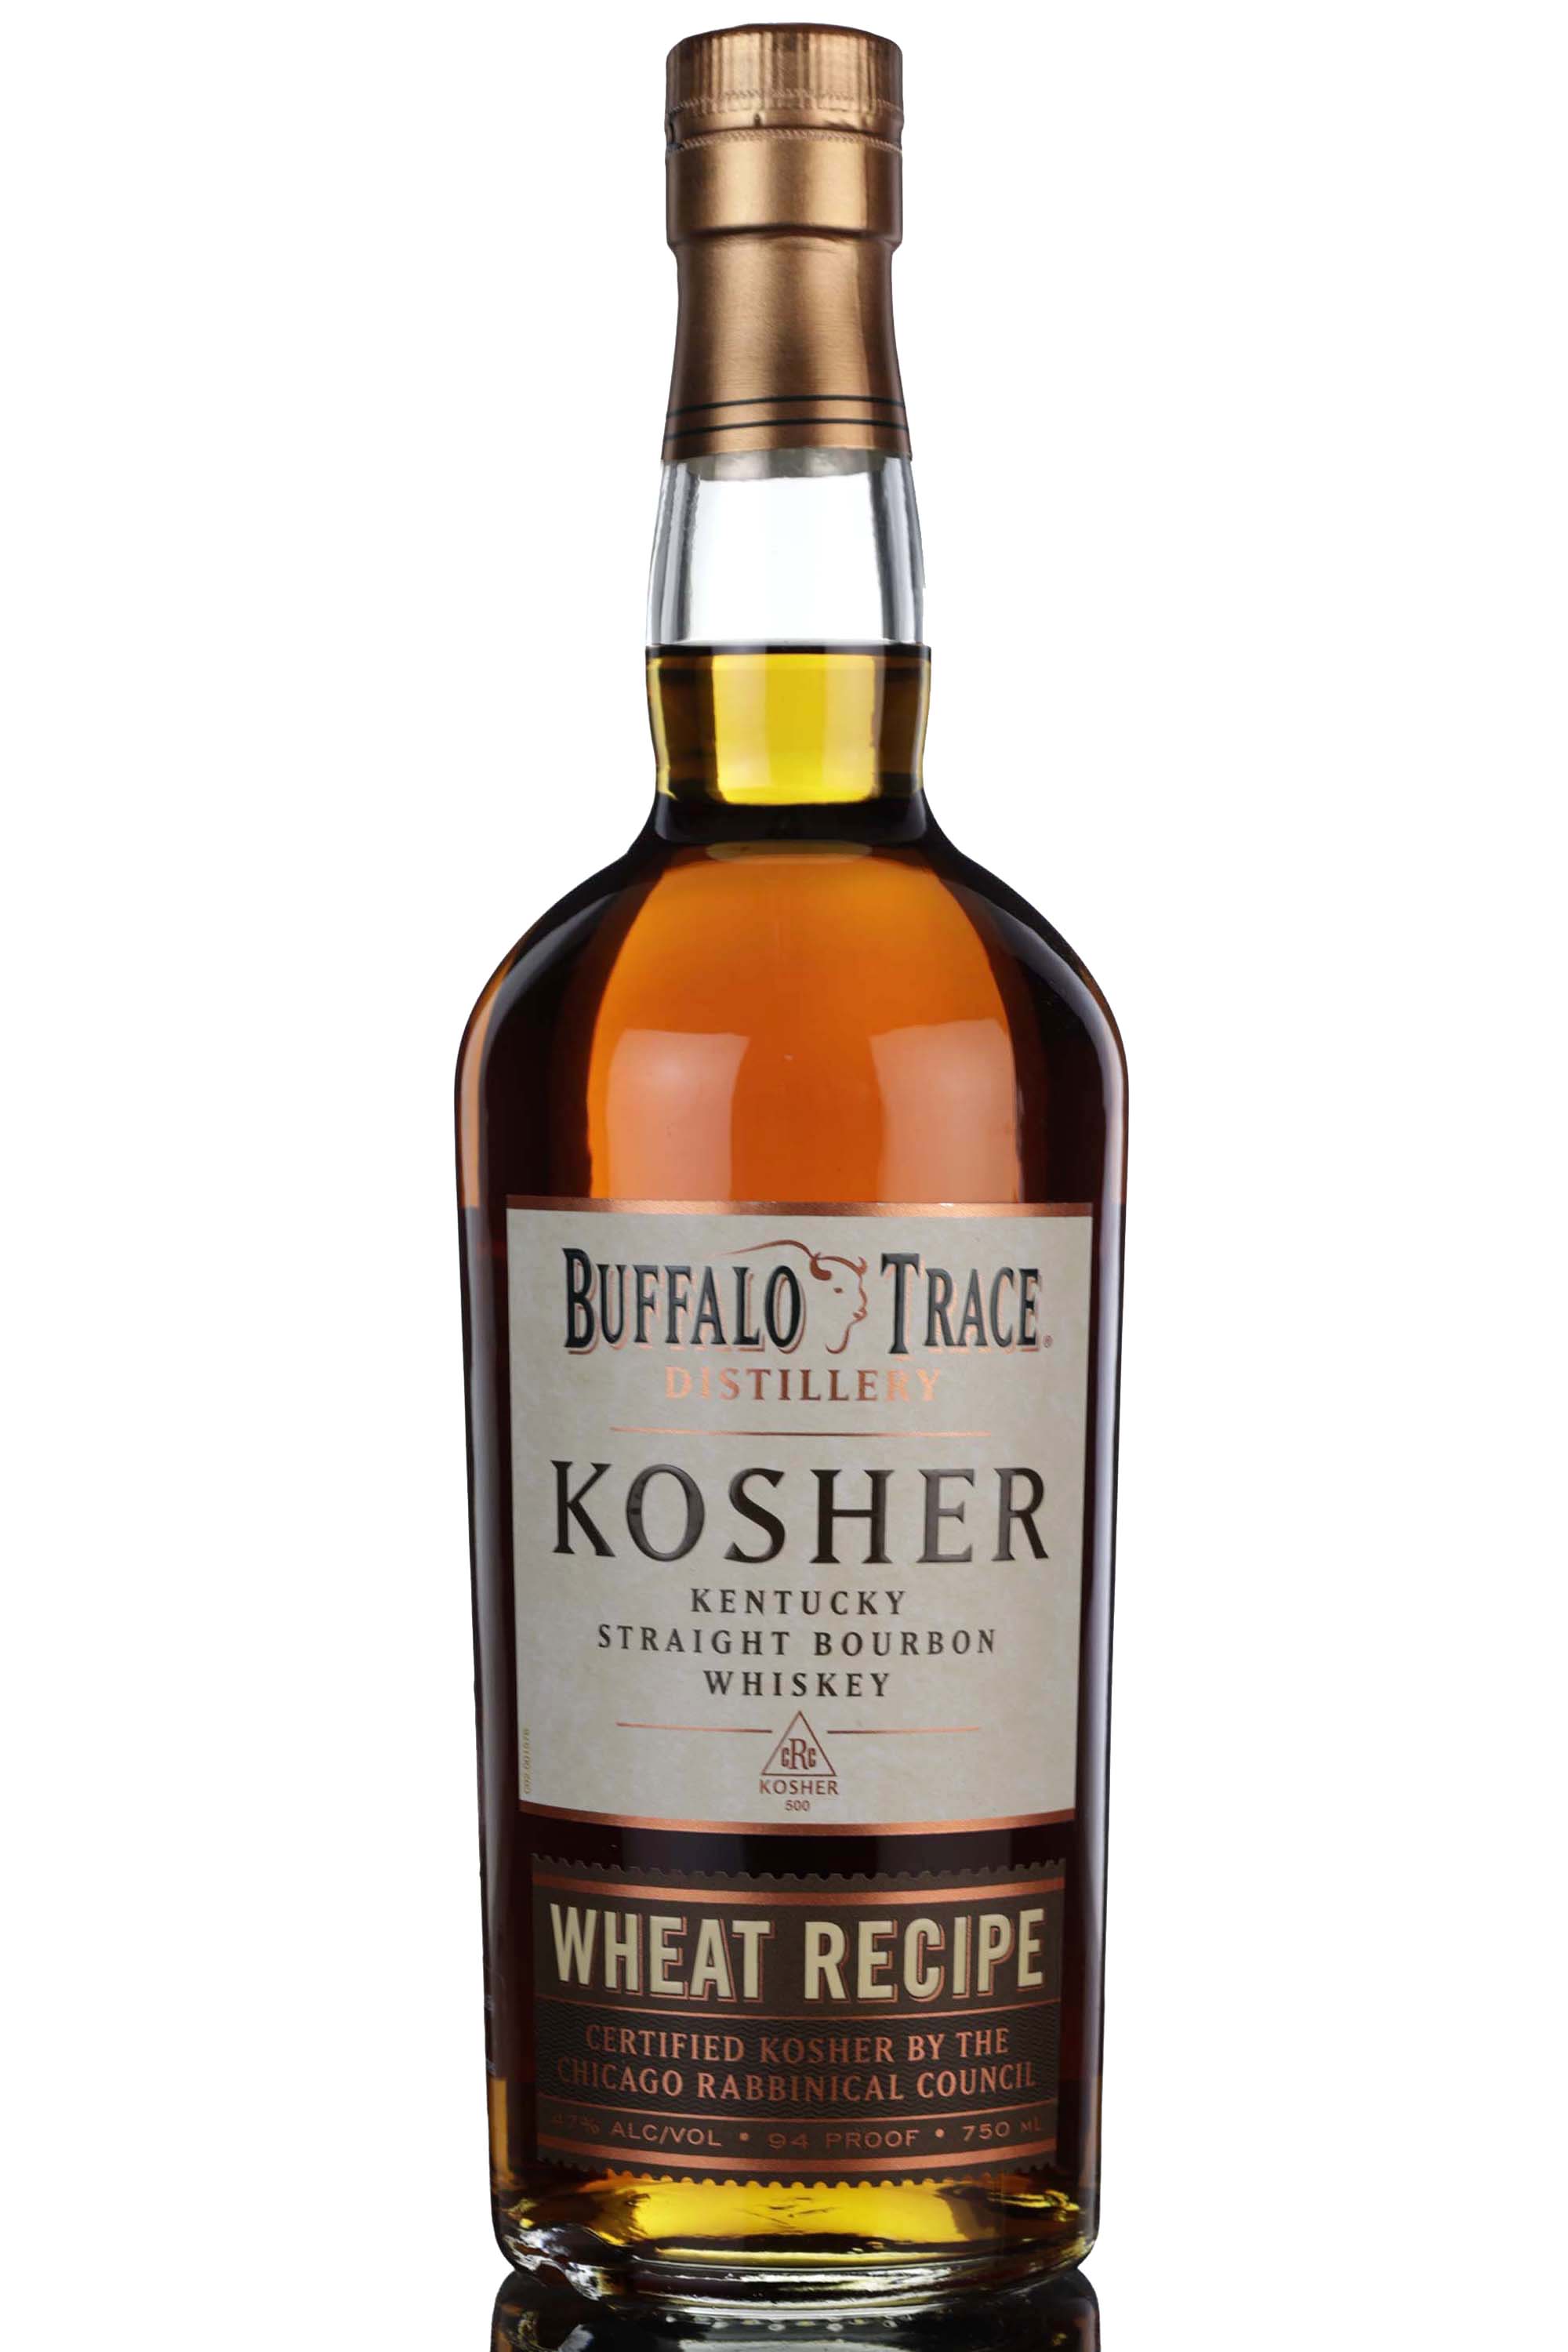 Buffalo Trace Bourbon - Kosher Wheat Recipe